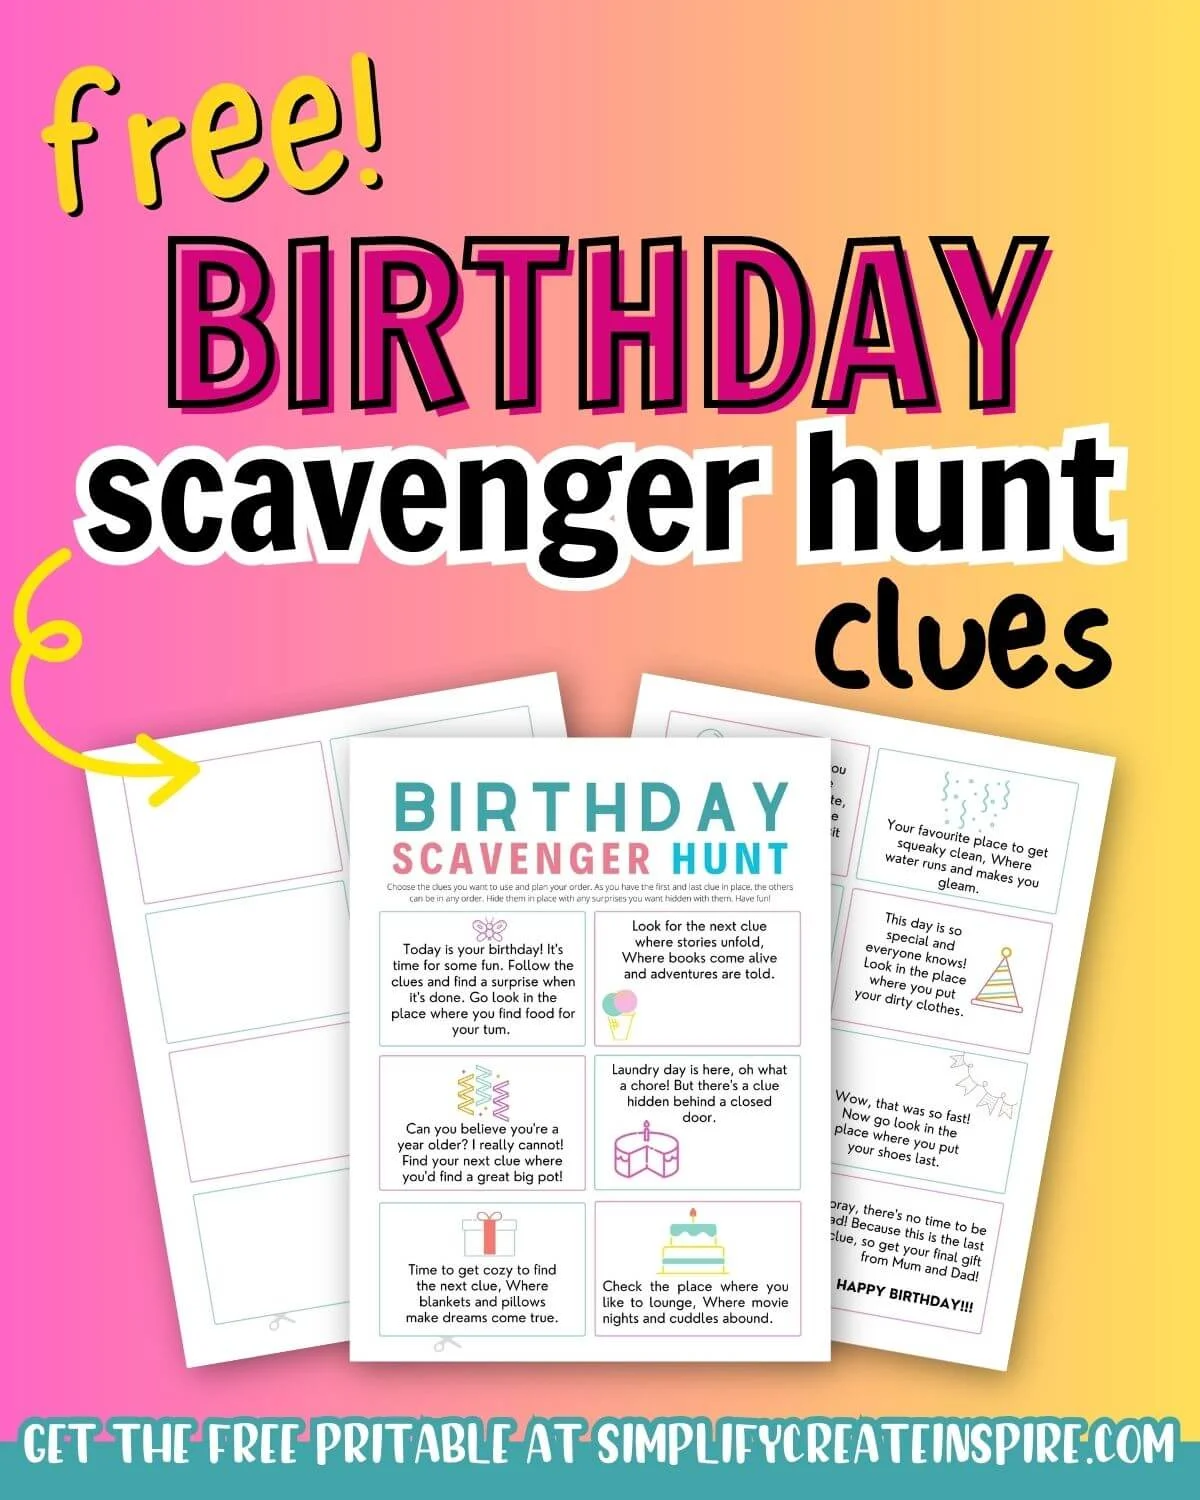 Free printable birthday scavenger hunt clues.